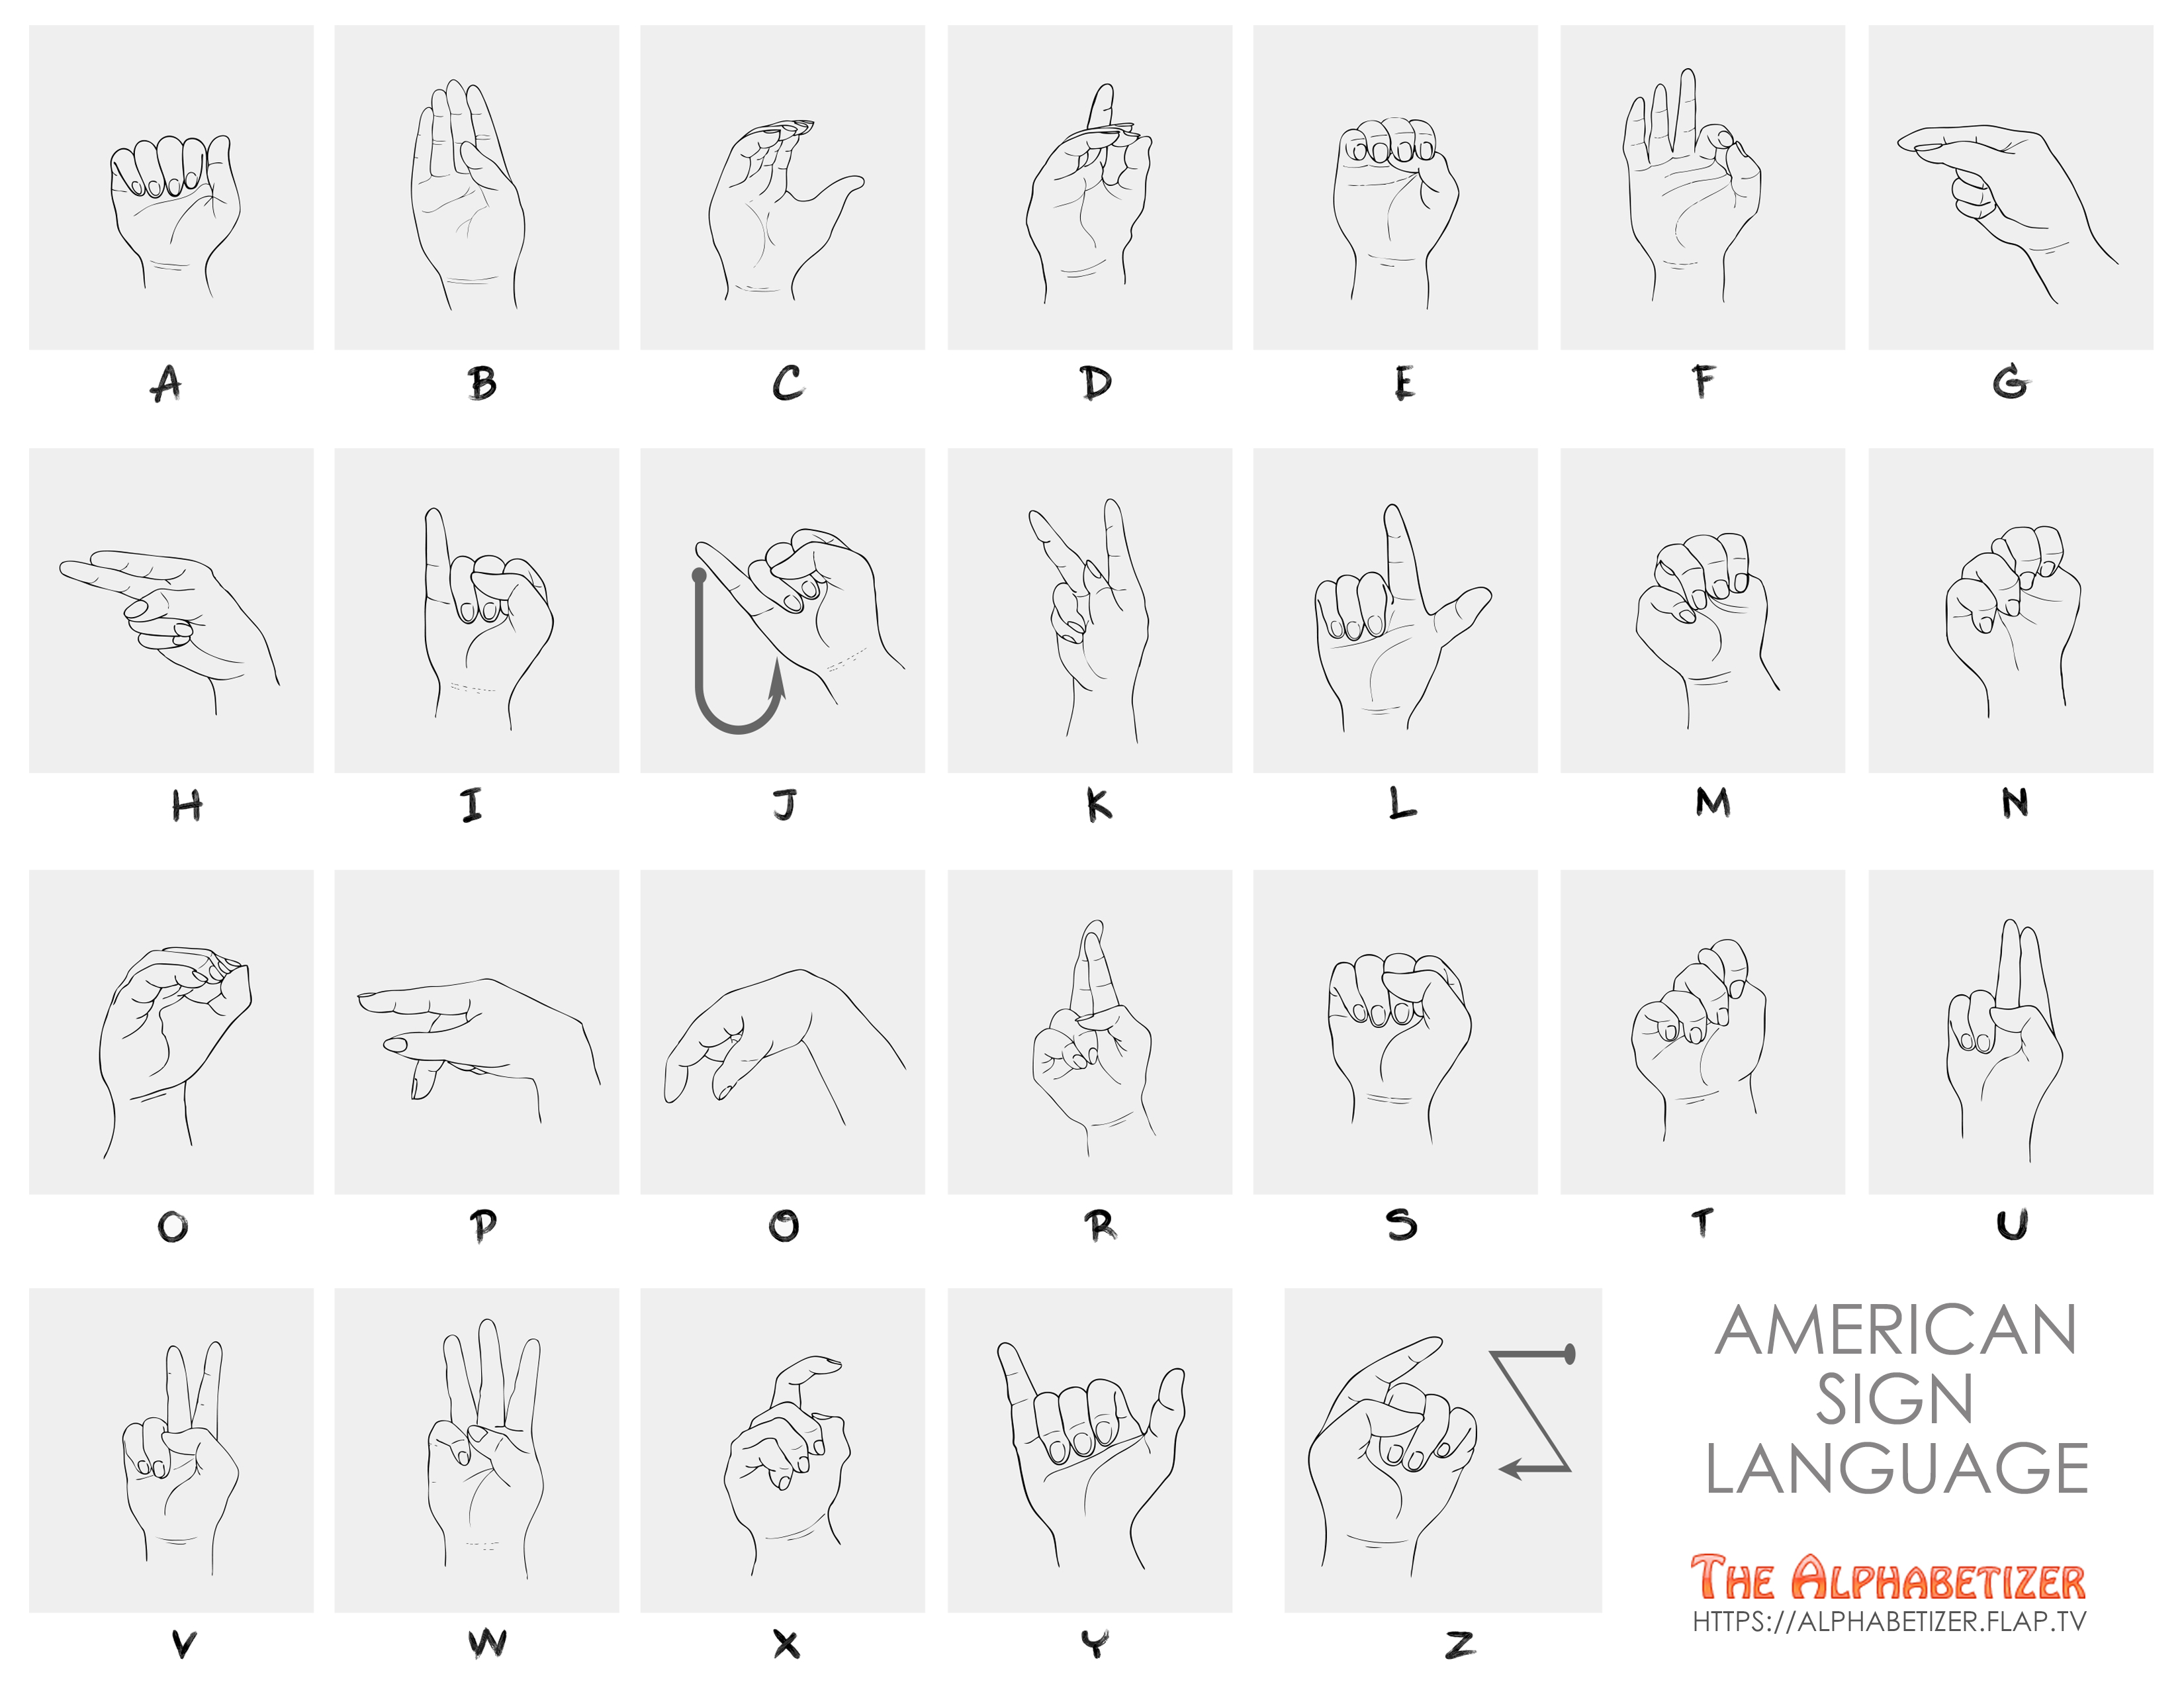 Sign Language Abc Chart